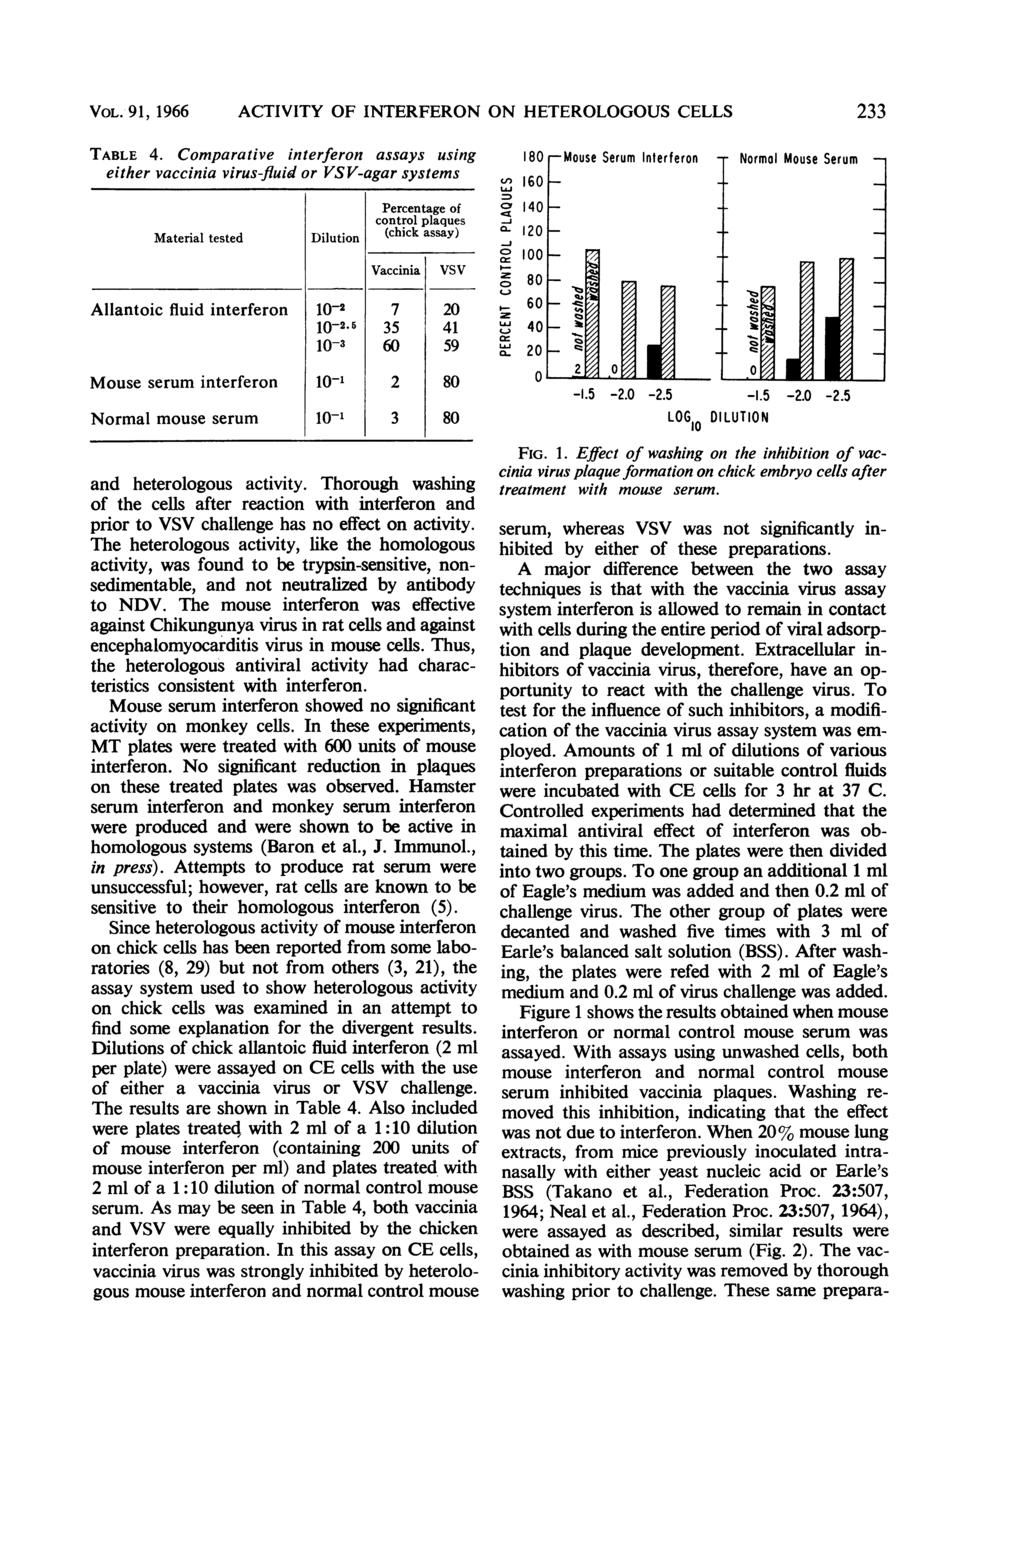 VOL. 91, 1966 ACTIVITY OF INTERFERON ON HETEROLOGOUS CELLS TABLE 4.